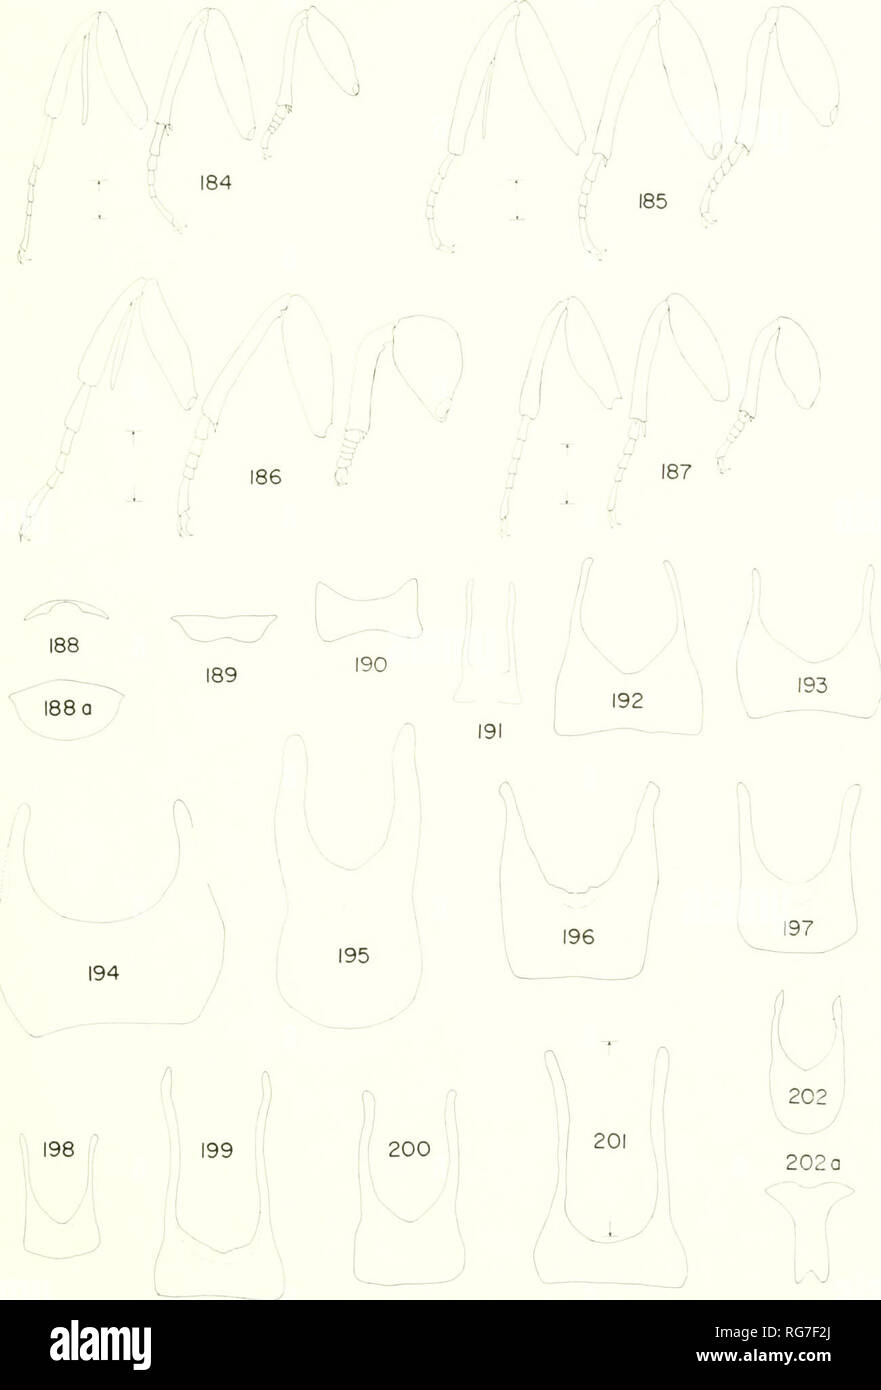 . Bulletin - United States National Museum. Science. BAGWORM MOTHS OF THE WESTERN HEMISPHERE 199. Figures 184-202a.—Legs and ei,L'hih ahJominal stcriiiies of male: 1S4, Oikeiicus geyeri; 185, 0. kirbyi; 186, 0. zihuatanejeusis: 1S7, Thyridopteryx t-pht-nu'ratinrmis; 188, Solenobia zvabhella, 8th sternite; 188a. 8tli tergiie; 189, Fumaria casta: V)0, Epichnopterix pulta; 191, ApteronacTenulella (P^urnpe); 192, Prochalia pygnuu-a; 193, Zawopsycheconimentella; 194, Naevipenna aphaidropa; 195, Cryptothelea ntrinanu-nsis; 196, C. -walsoni; 197, C. macleayi, type; 198, C. symmicta: 199. C. cmigrrgal Stock Photo